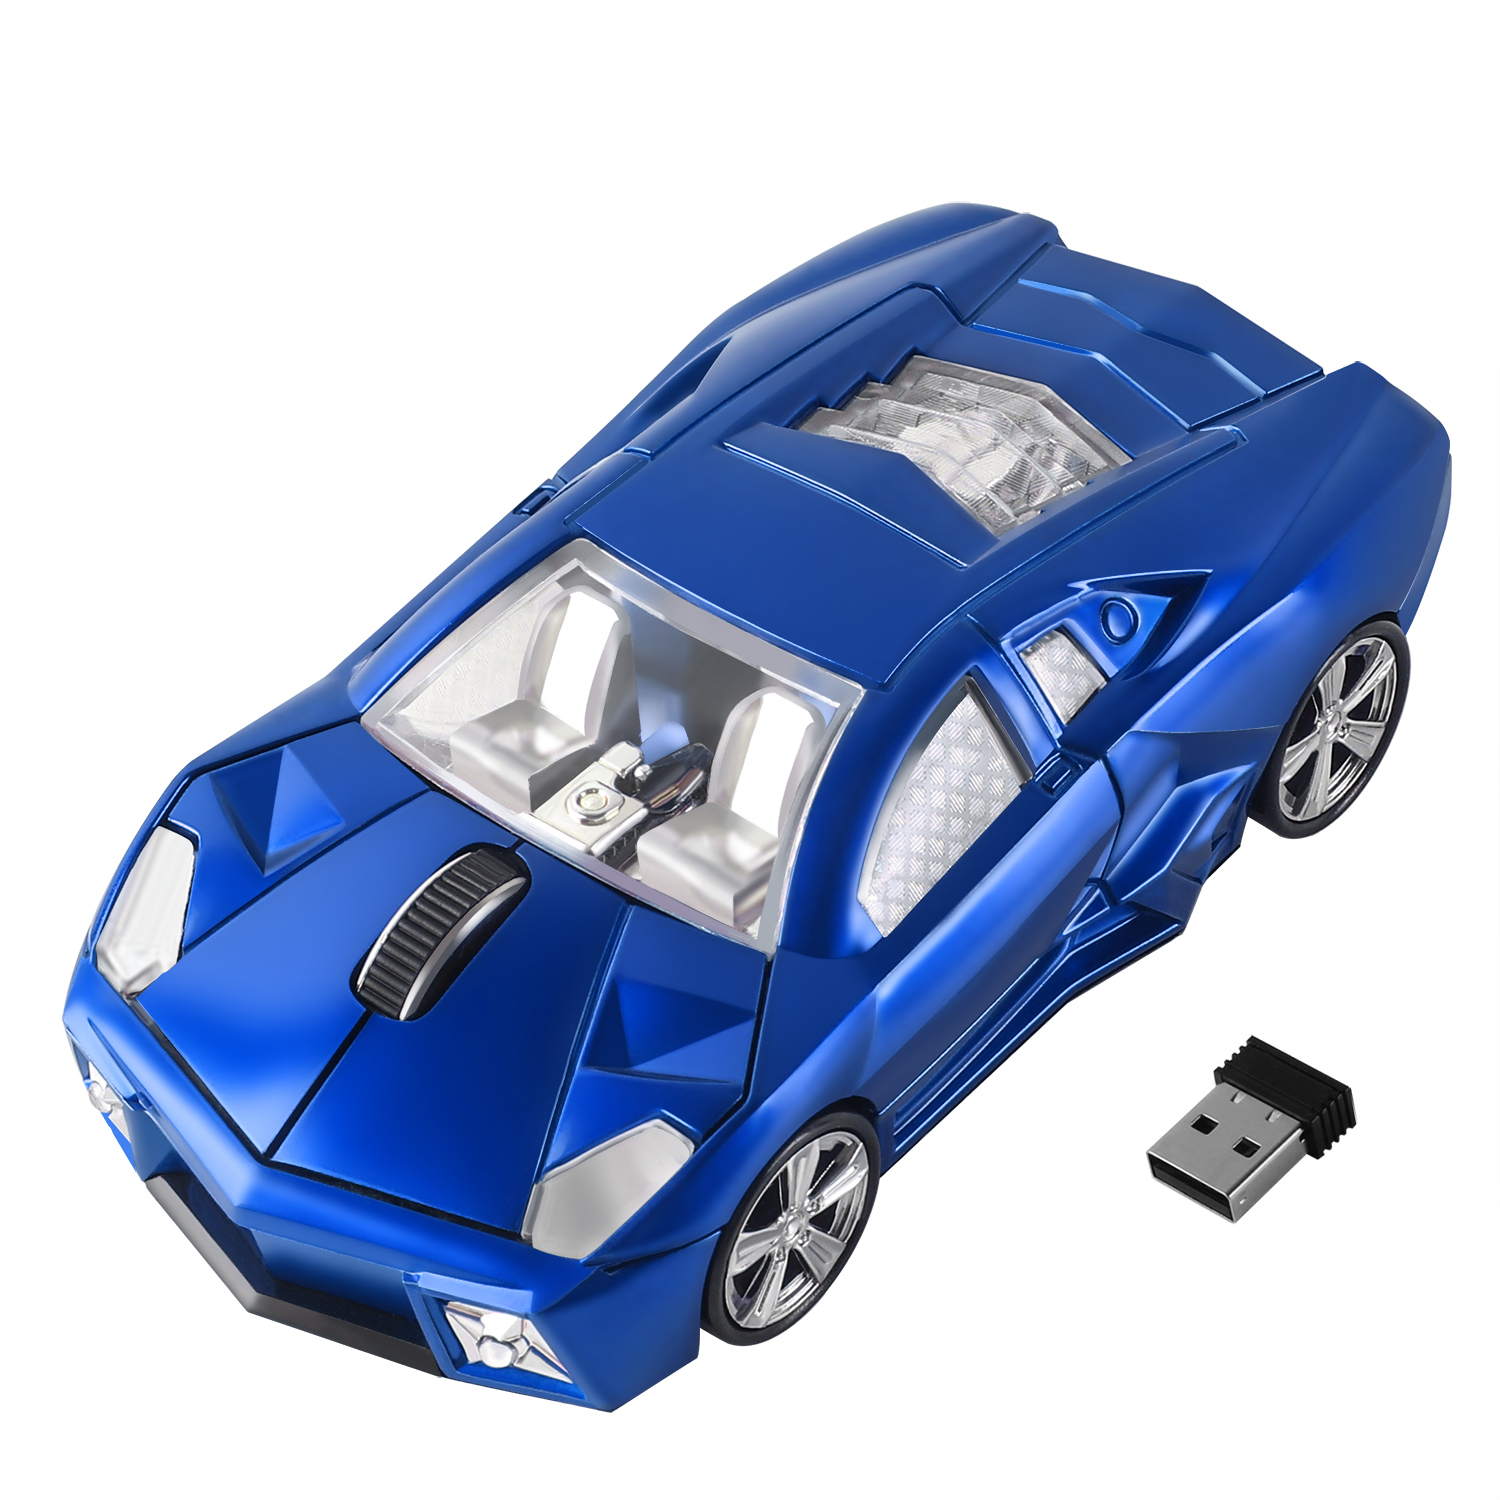 2-4G-Wireless-Mouse-Ergonomic-Sports-Car-Design-Gaming-Mause-1600-DPI-USB-Optical-Kids-Gift (7)